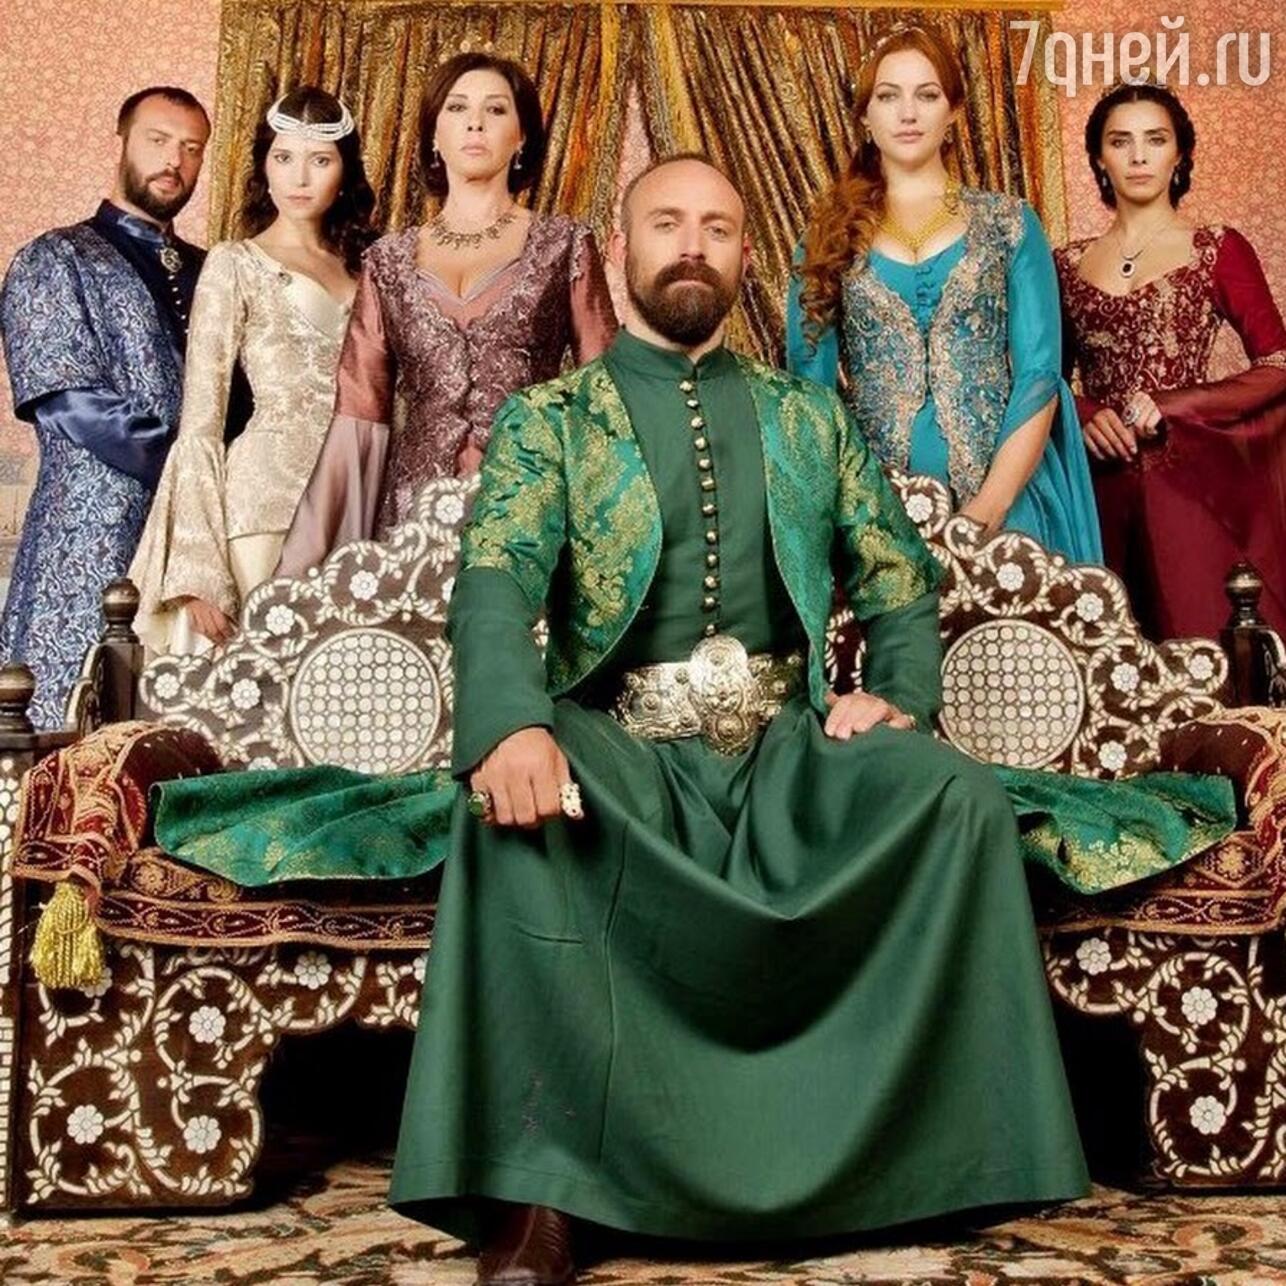 Порно фильм гарем султана онлайн